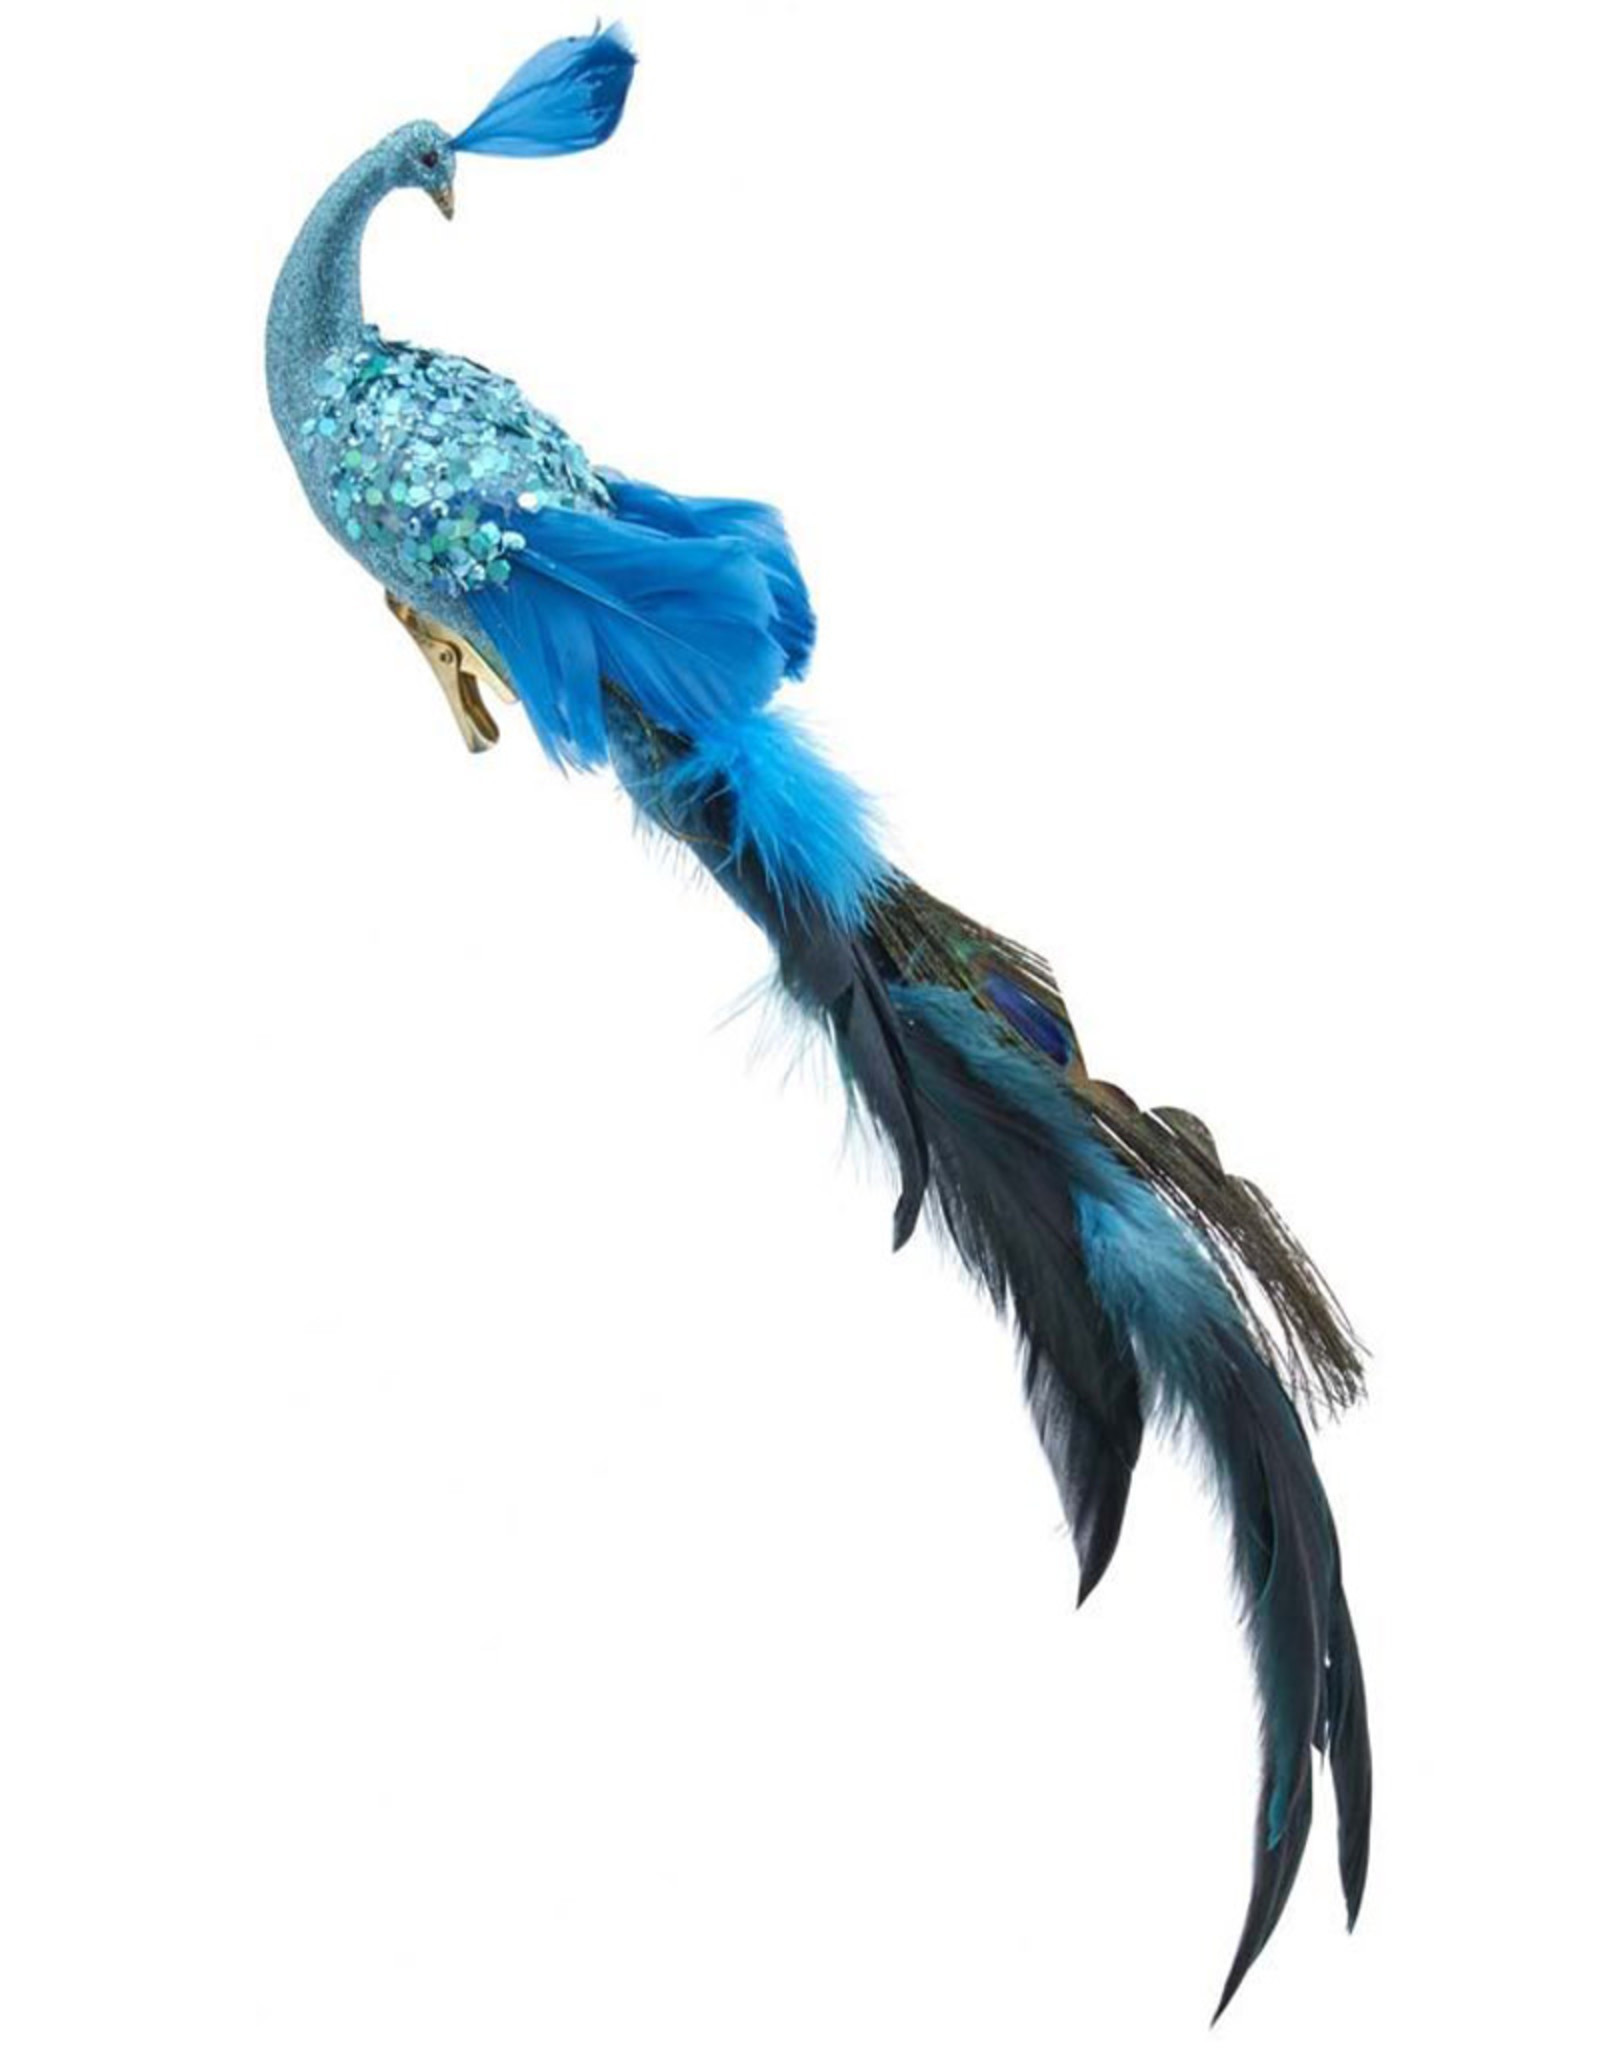 Kurt Adler Feather Peacock With Clip Bird Ornament Style A